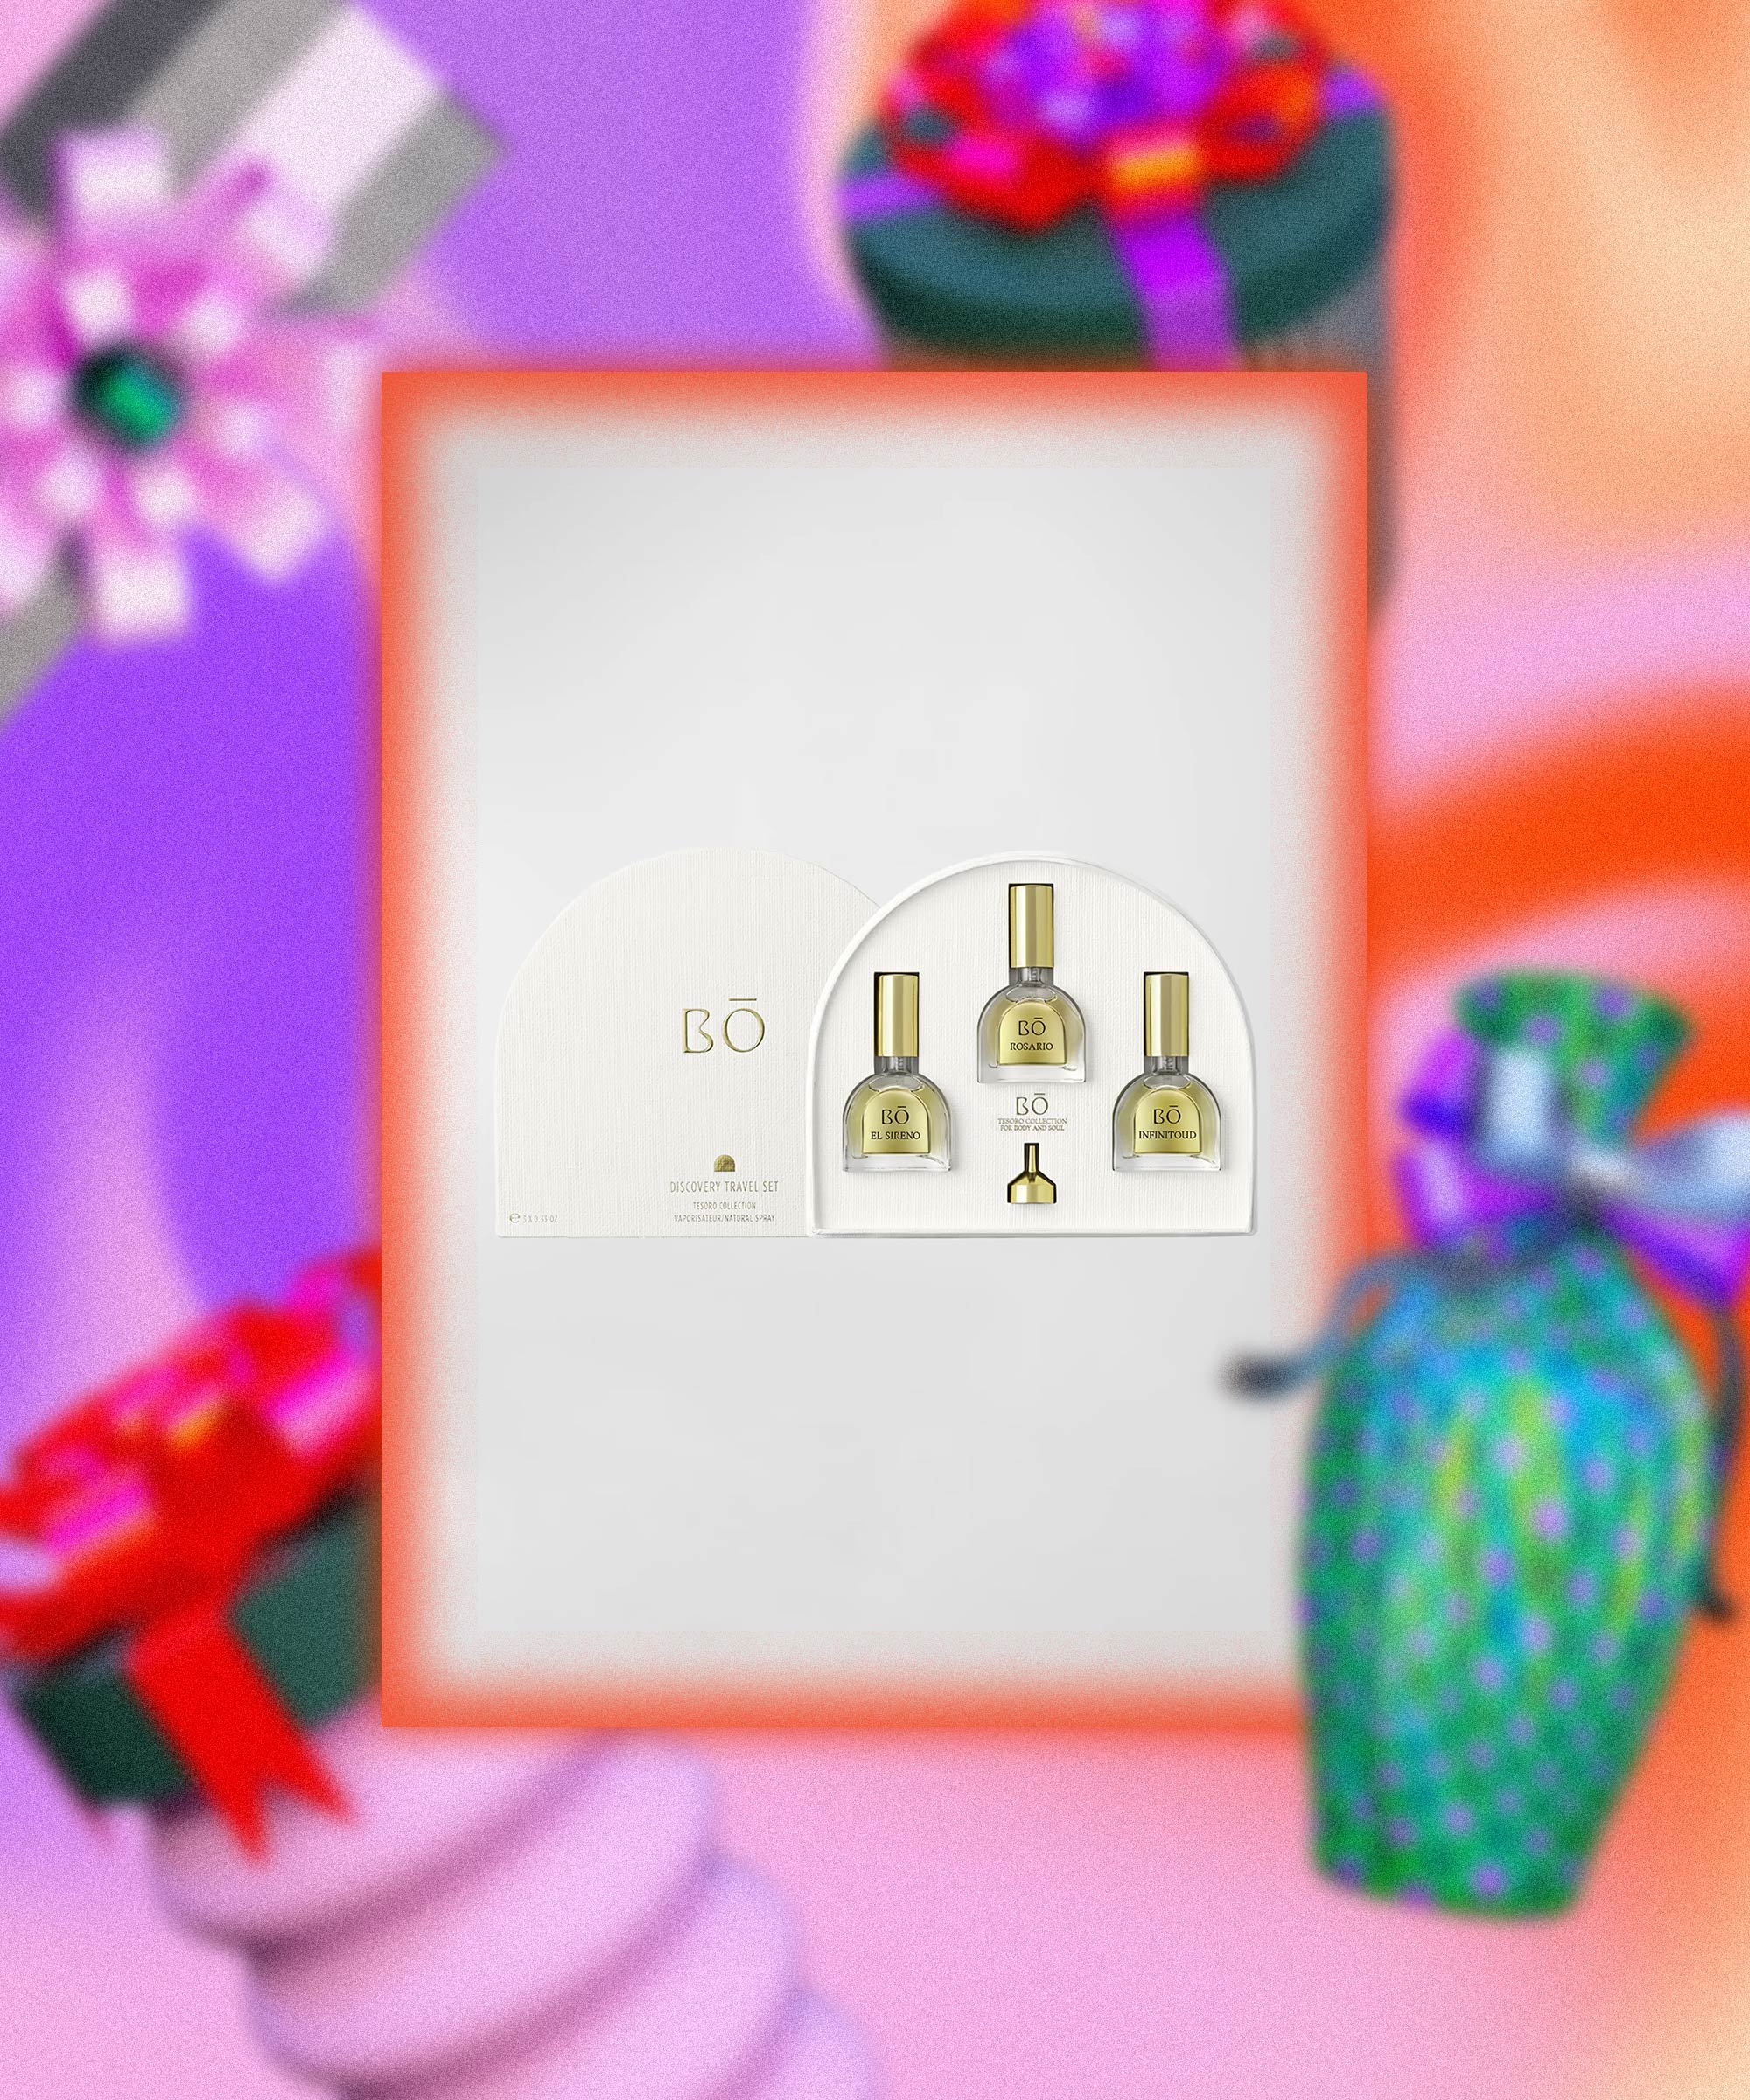 Chloe Les Parfums x 3 Miniature Ladies Gift Set